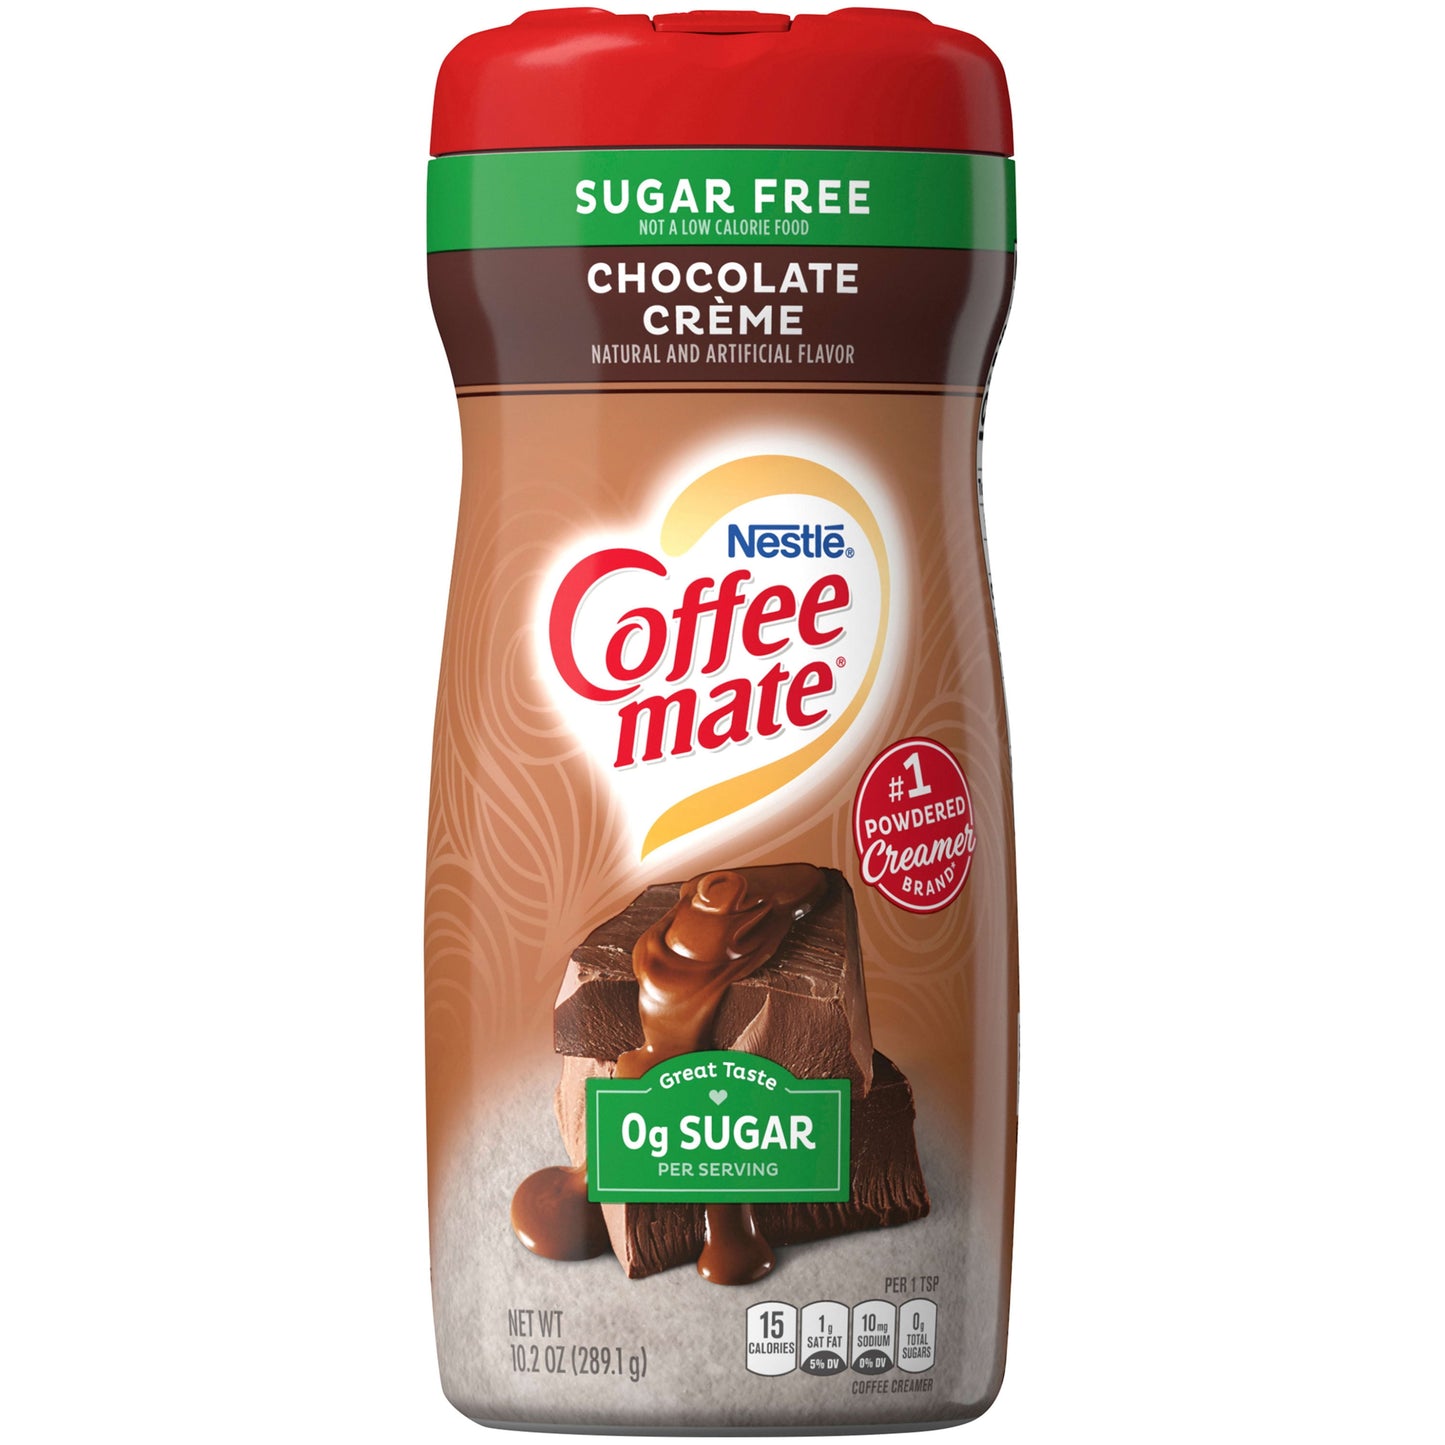 Nestle Coffee mate Chocolate Creme Sugar Free Powder Coffee Creamer, 10.2 oz